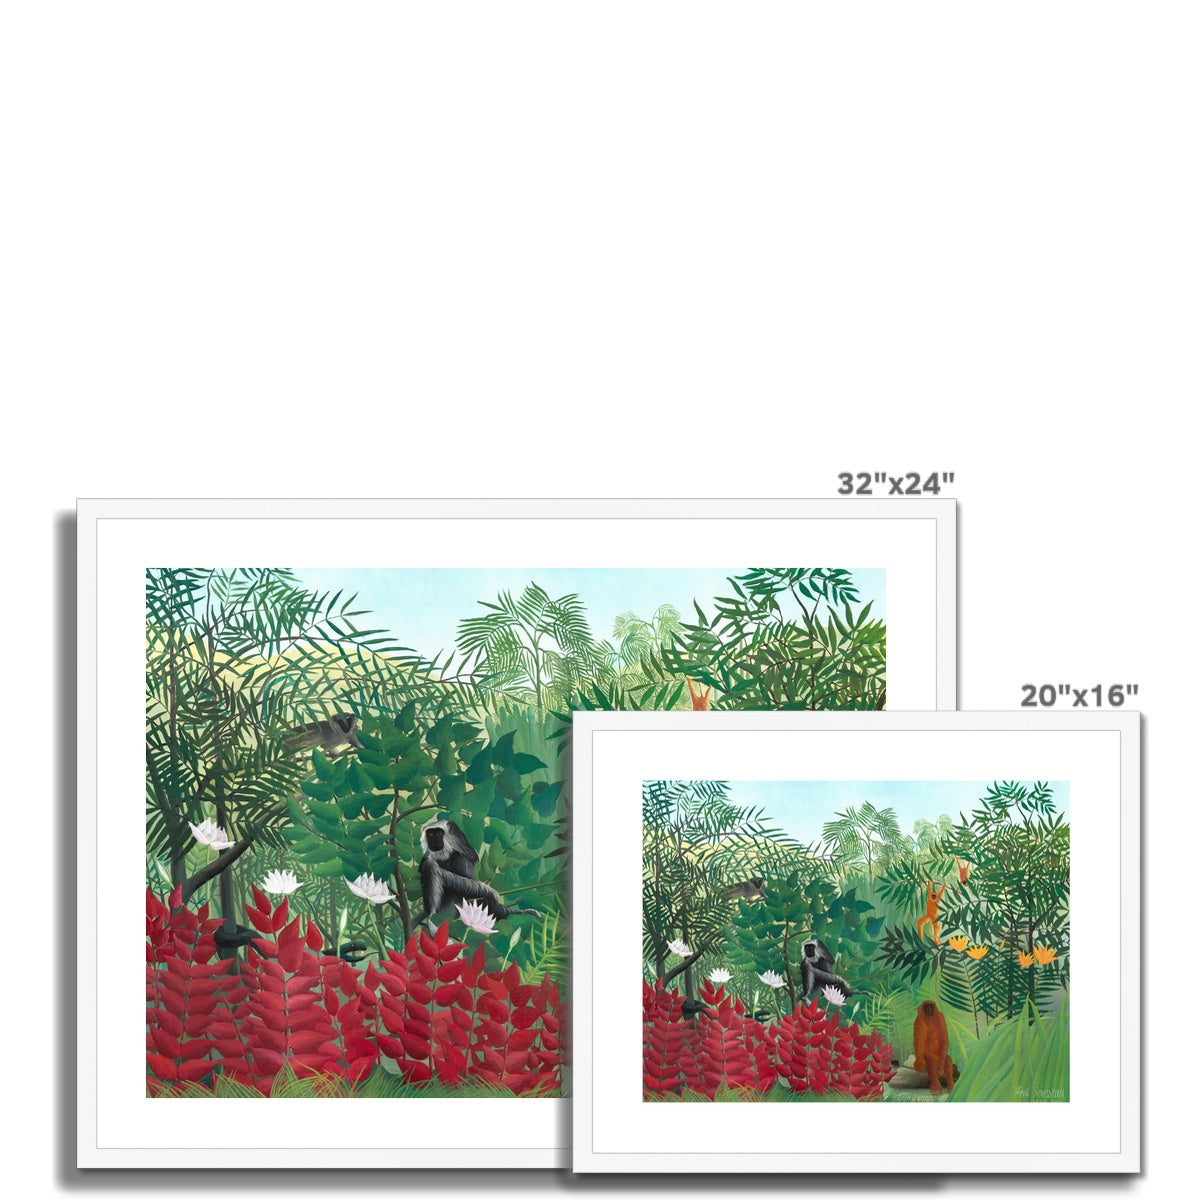 Henri Rousseau Framed Open Edition Art Print. &#39;Tropical Forest with Monkeys&#39;. Art Gallery Historic Art